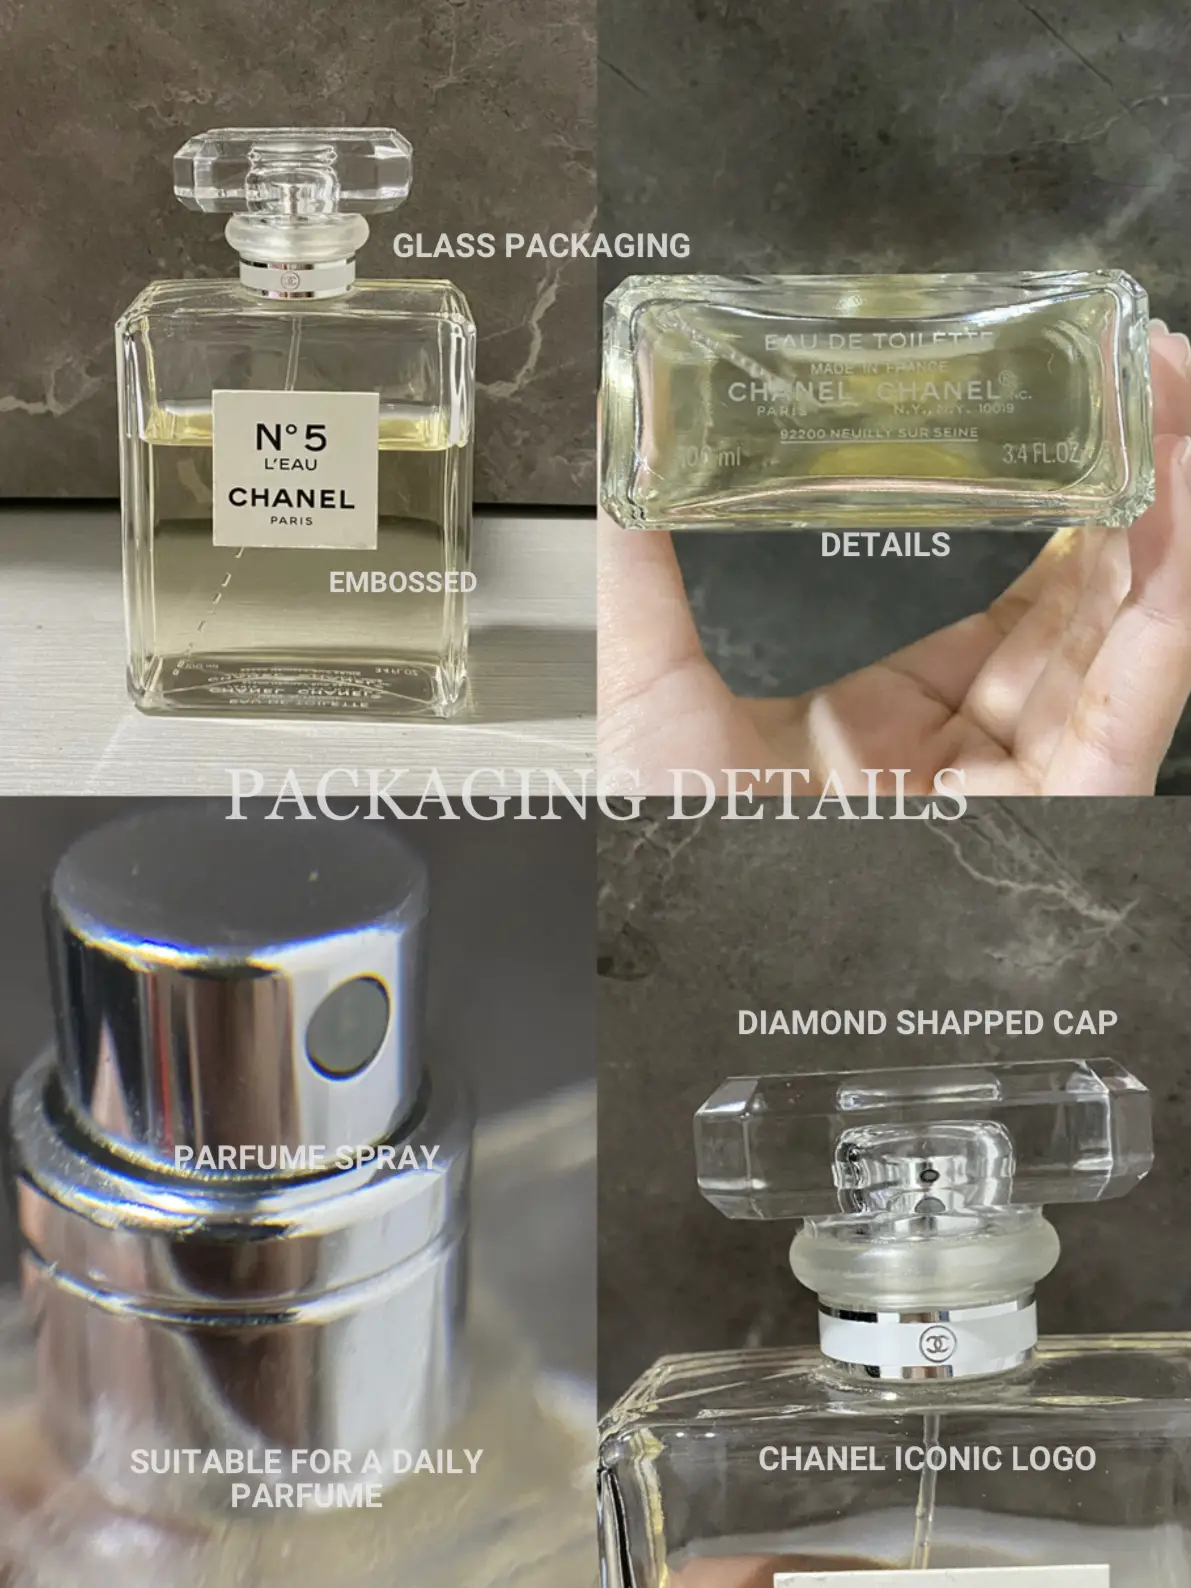 Chanel No 5 Eau de Cologne Chanel perfume - a fragrance for women